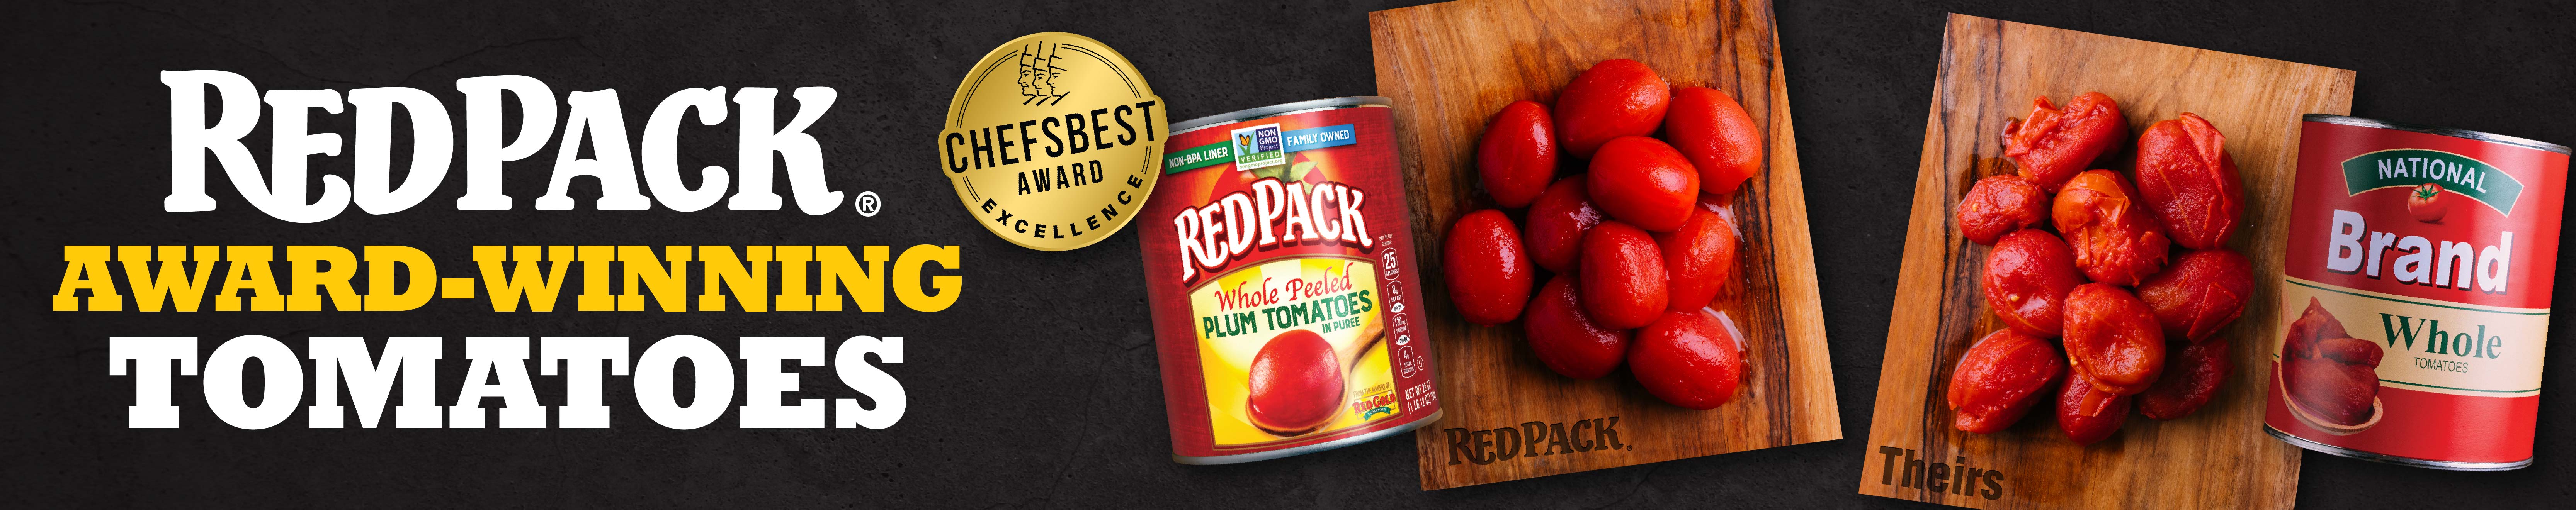 Redpack Award-Winning Tomatoes with Chefsbest Award